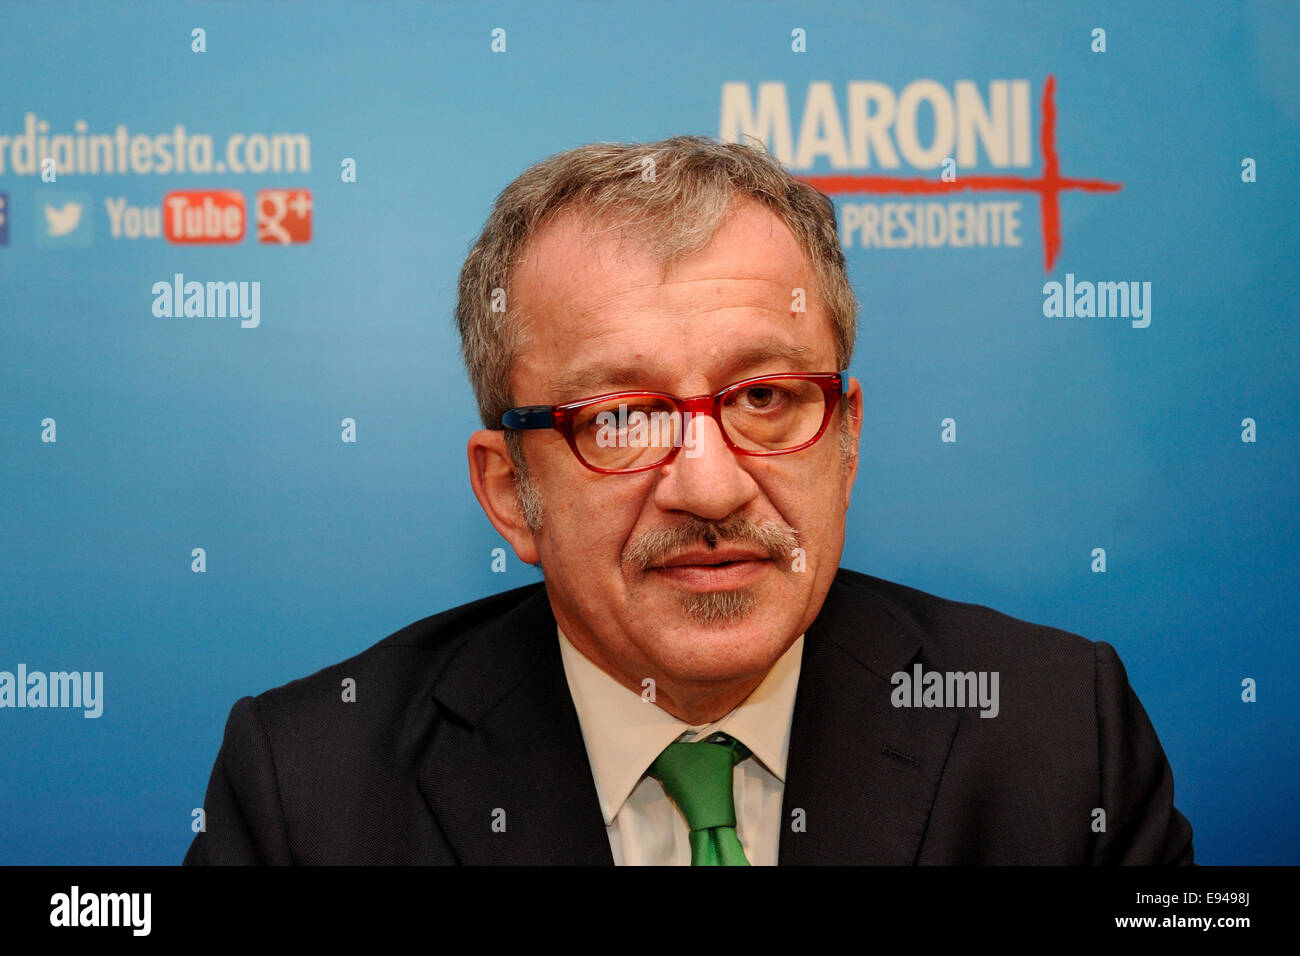 Roberto Maroni  President of Lombardy Stock Photo